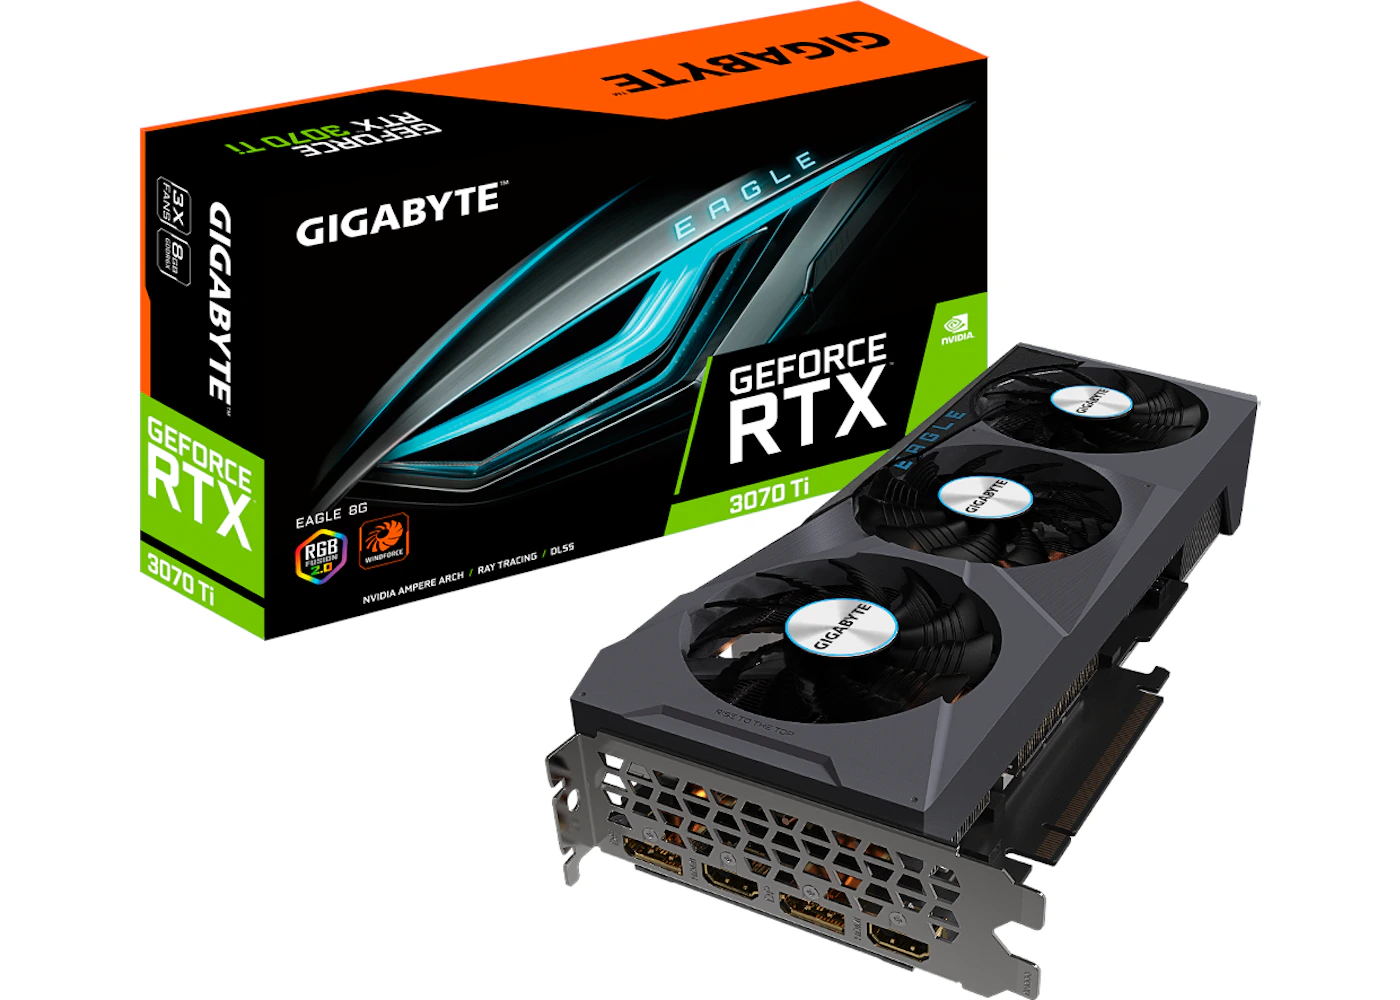 NVIDIA GIGABYTE GeForce RTX 3070 Ti EAGLE 8G (GV-N307TEAGLE-8GD) - US